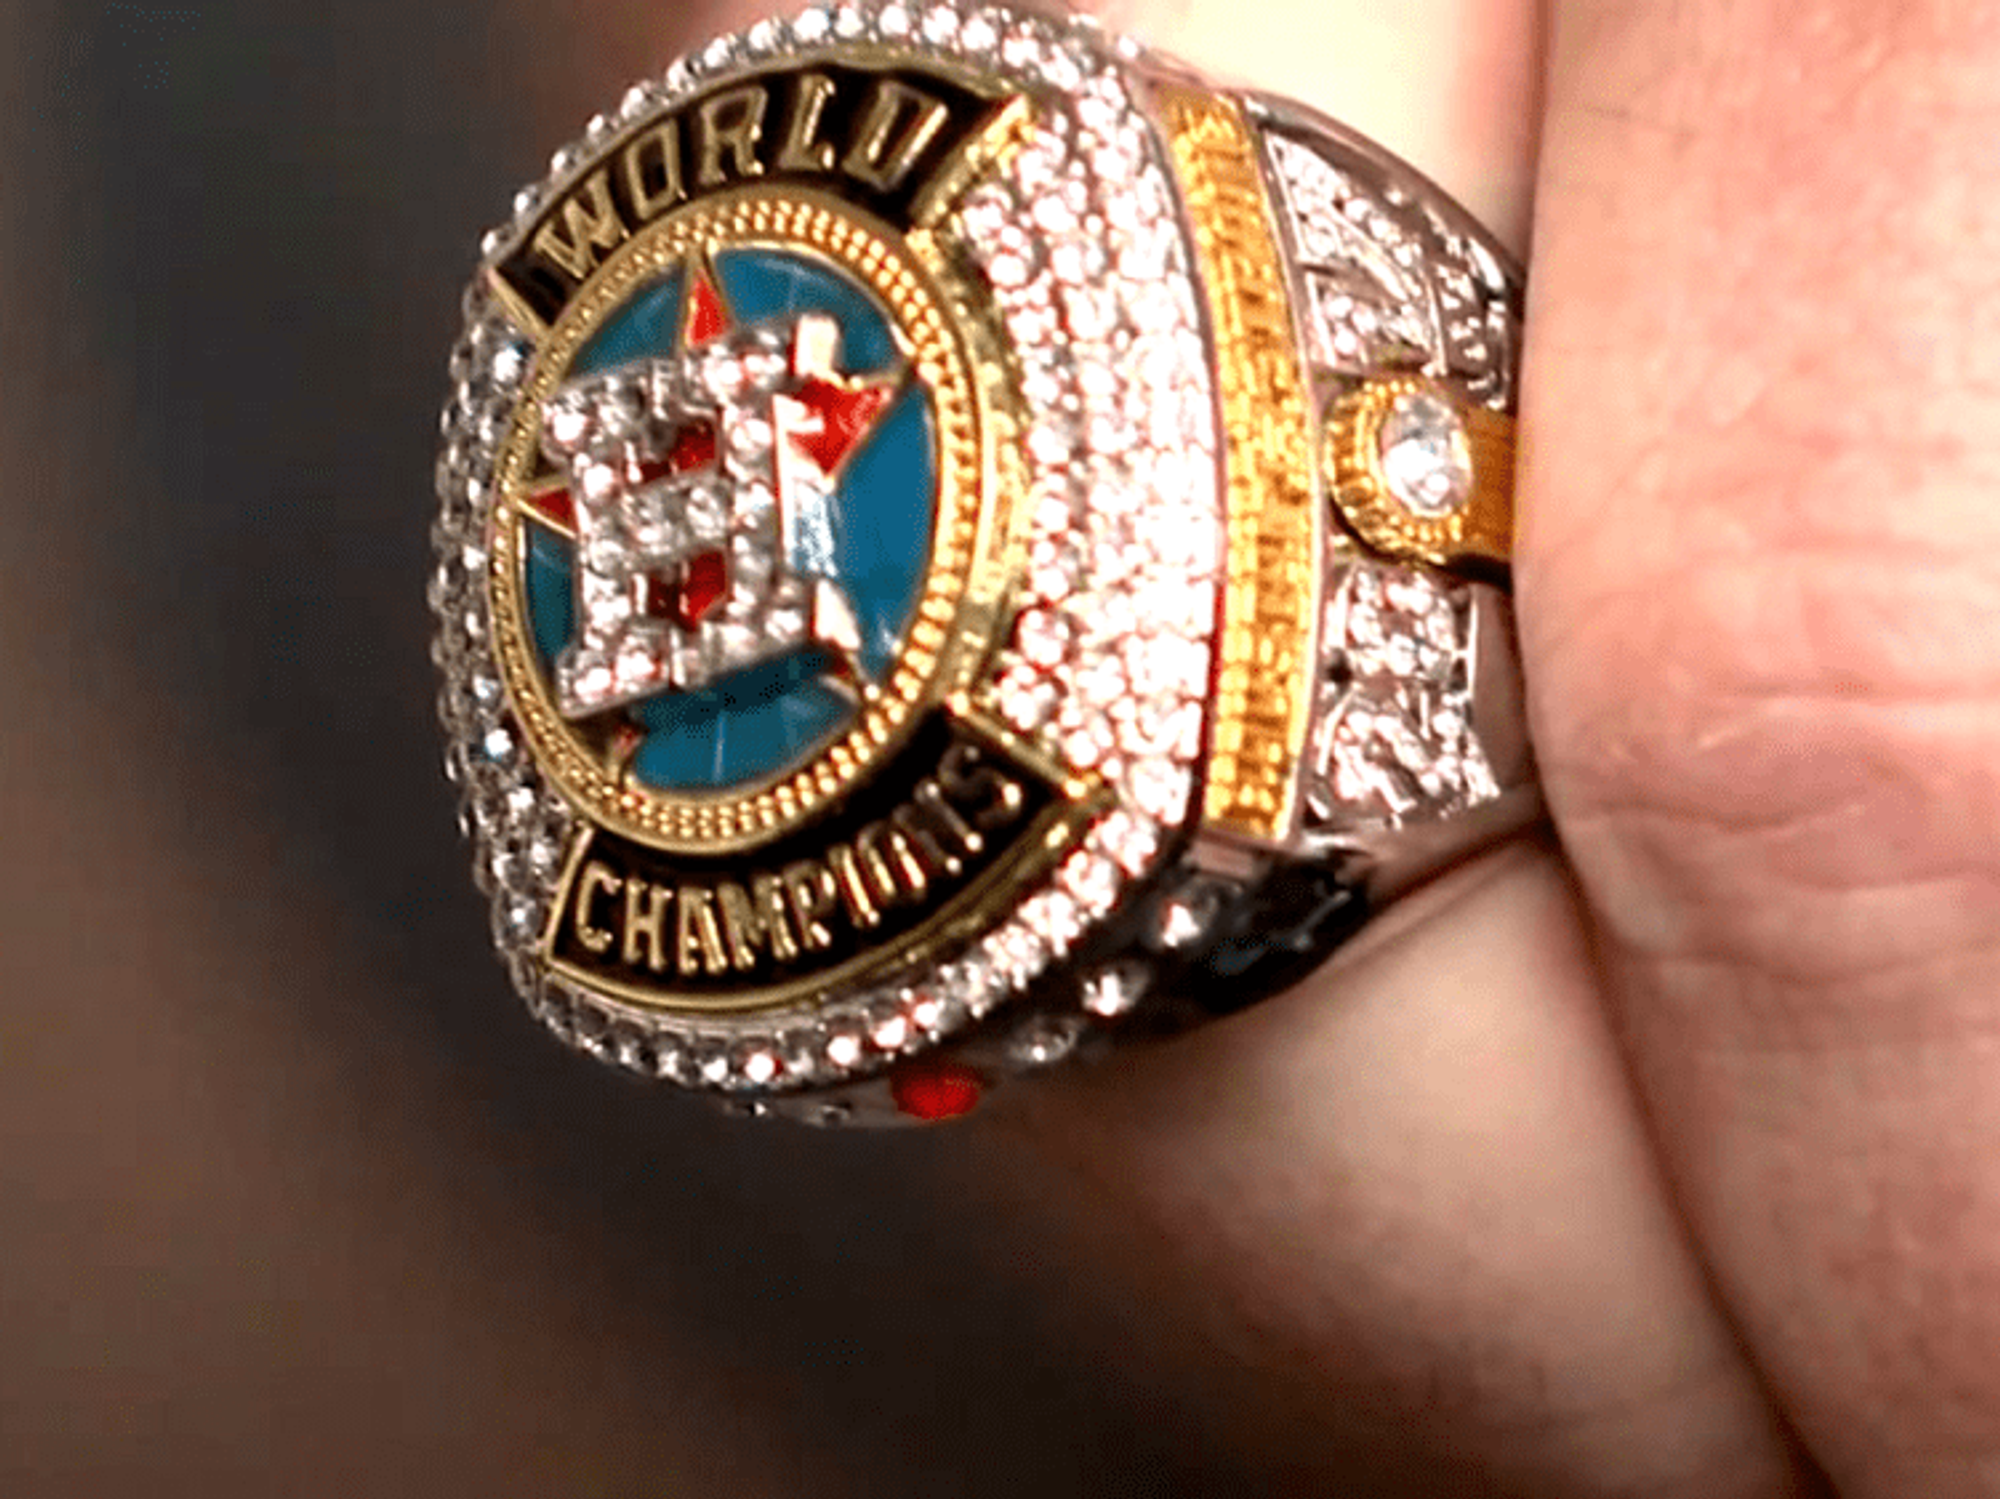 Houston Astros 2022 World Series Championship Ring is bomb!